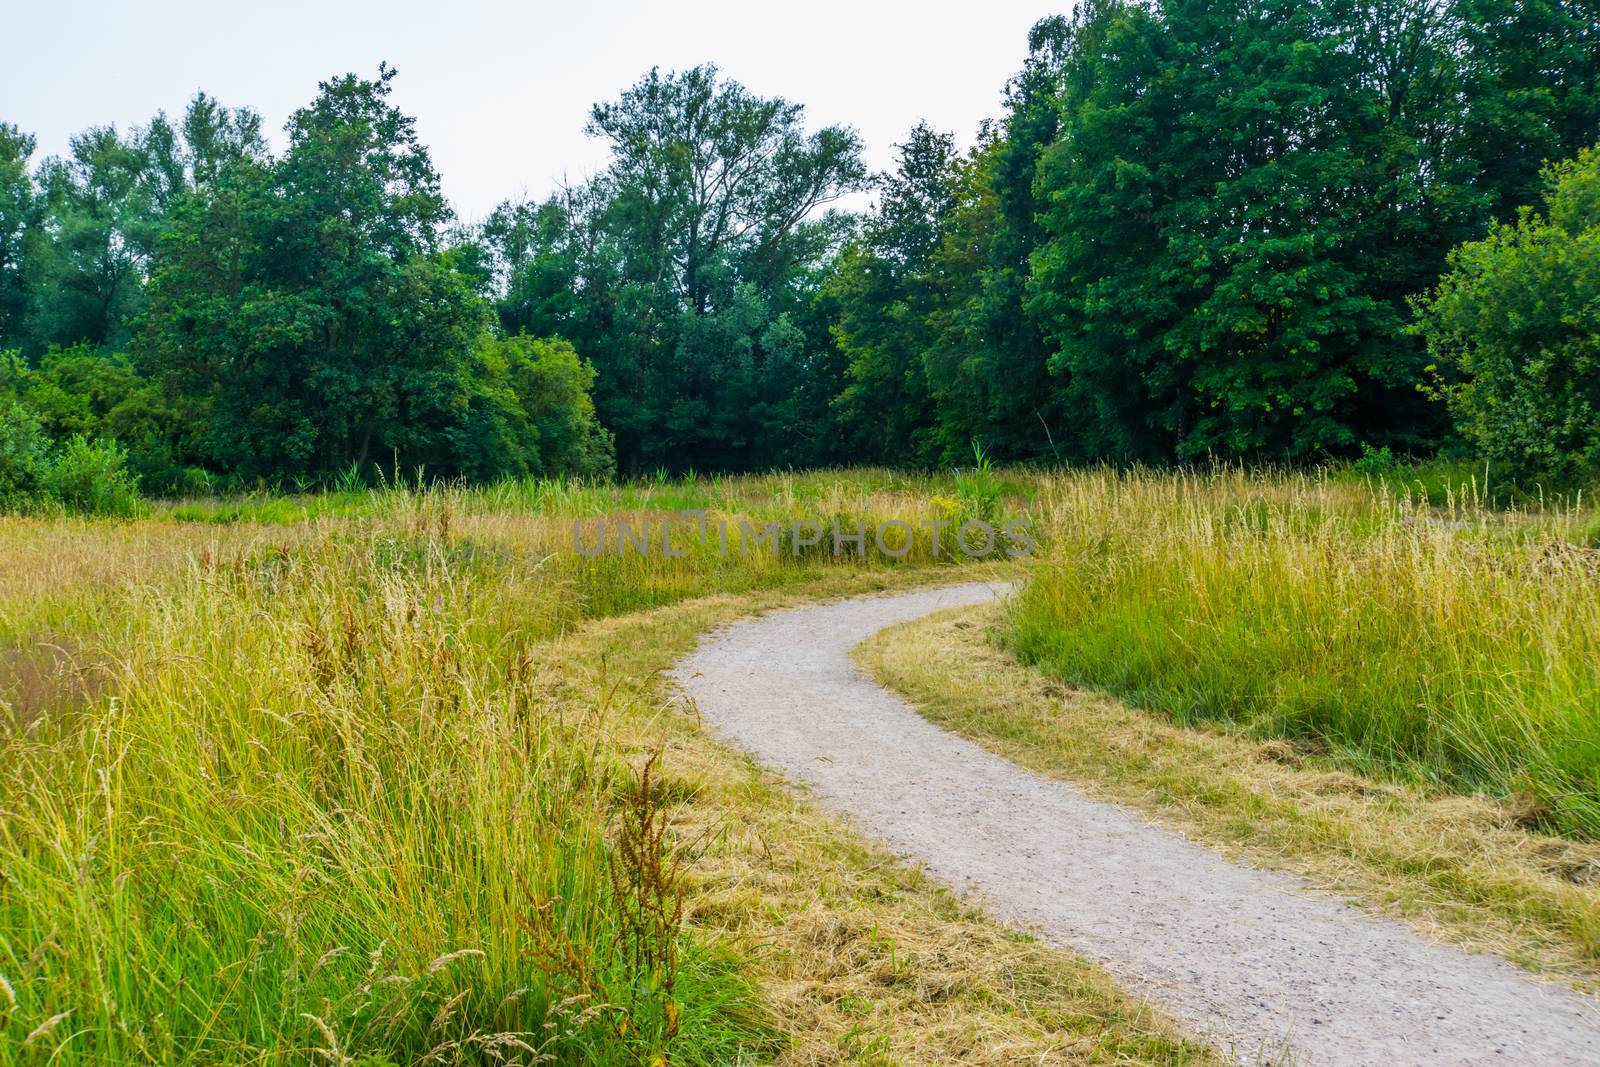 Walking road with grass land, nature landscape in the Melanen, Halsteren, Bergen op zoom, The Netherlands by charlottebleijenberg